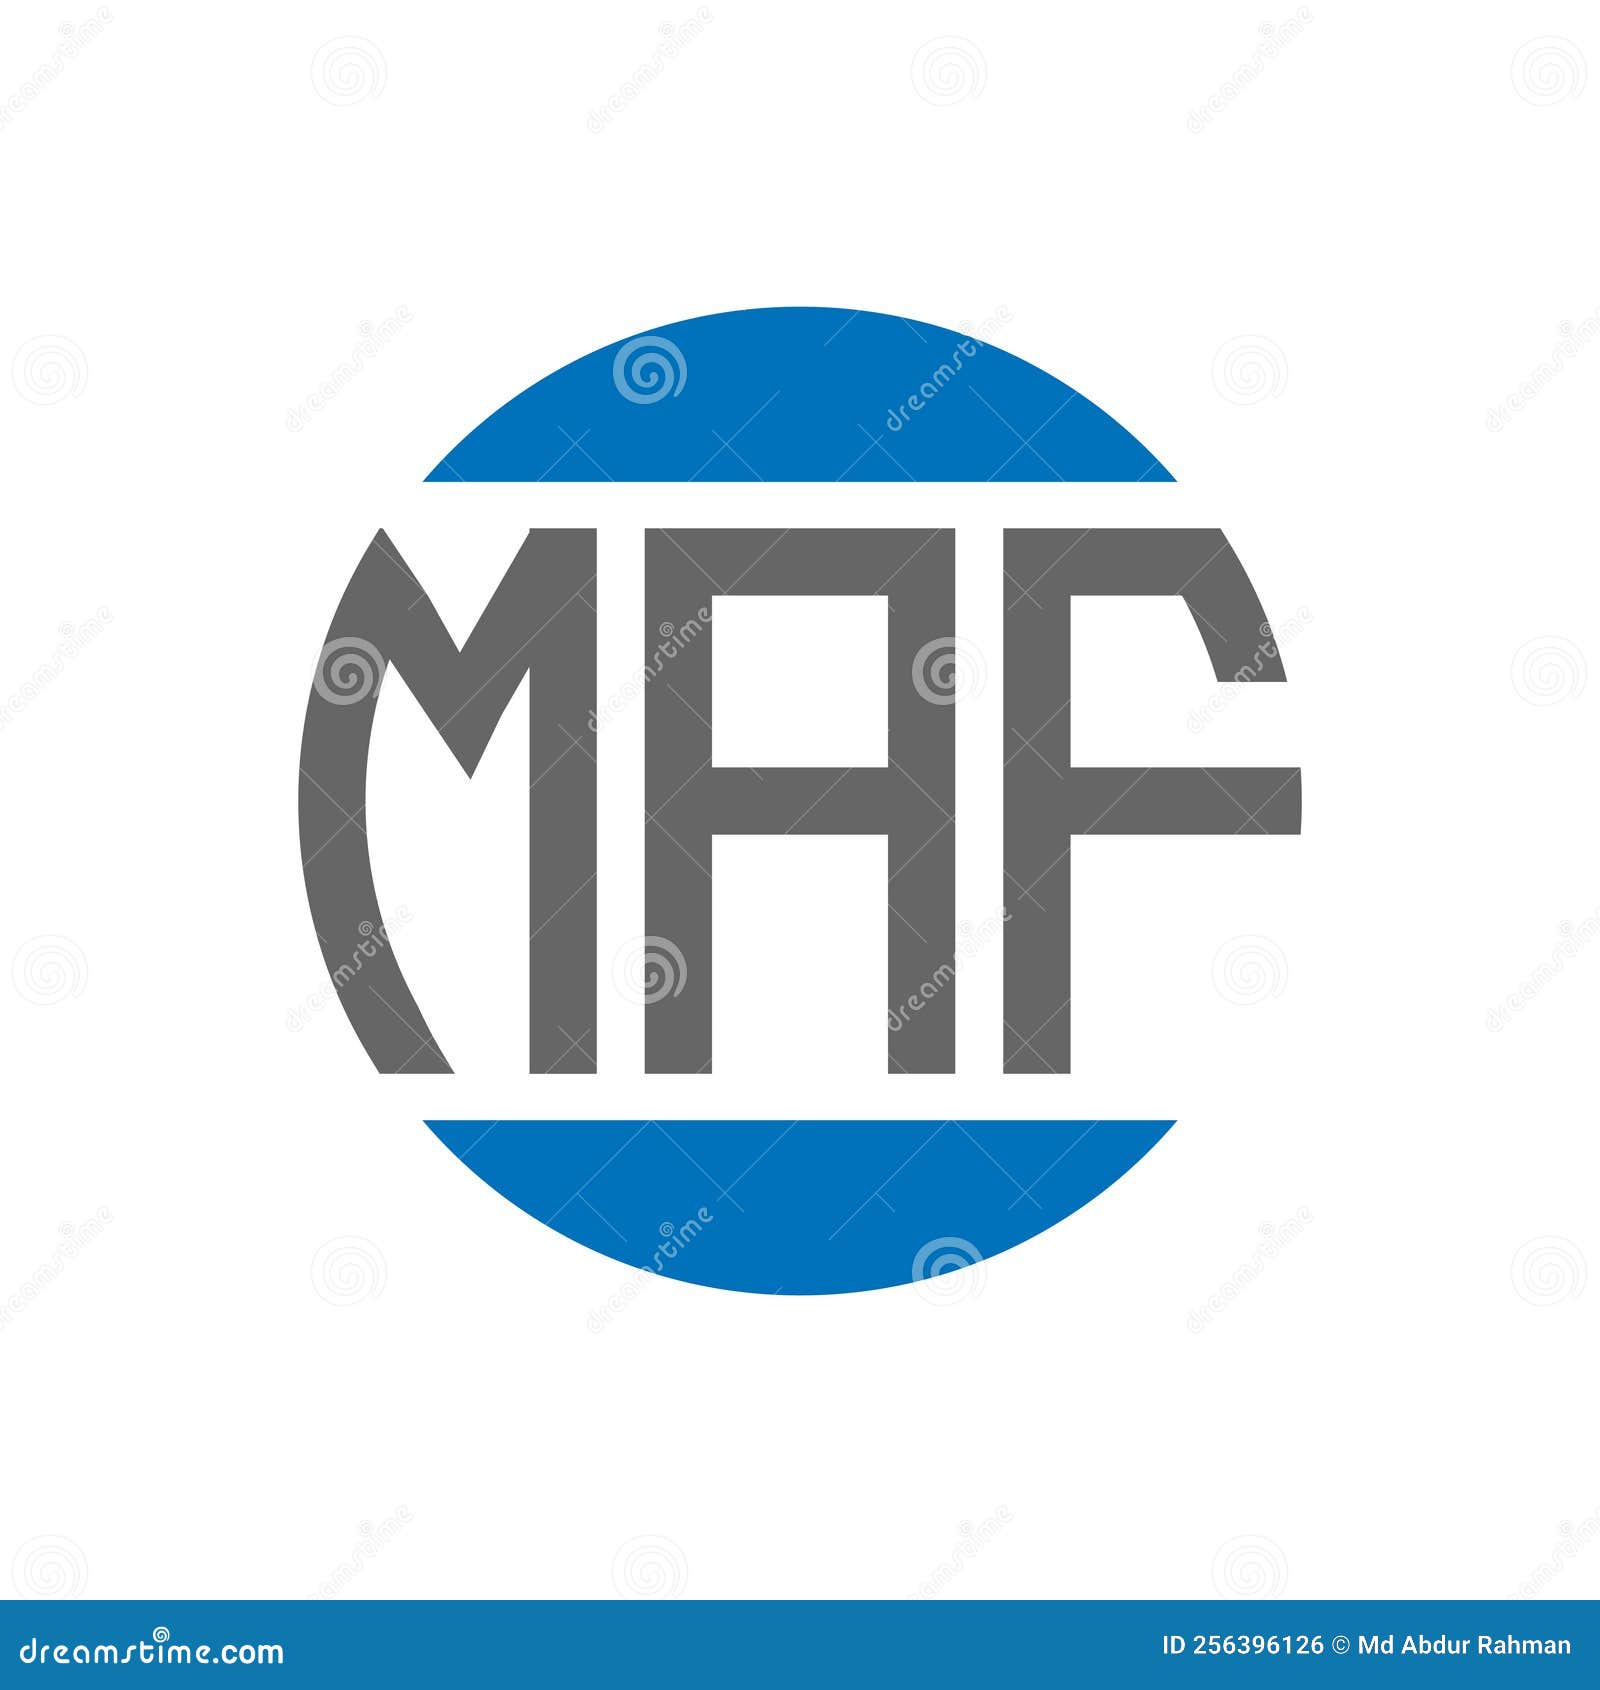 maf letter logo  on white background. maf creative initials circle logo concept. maf letter 